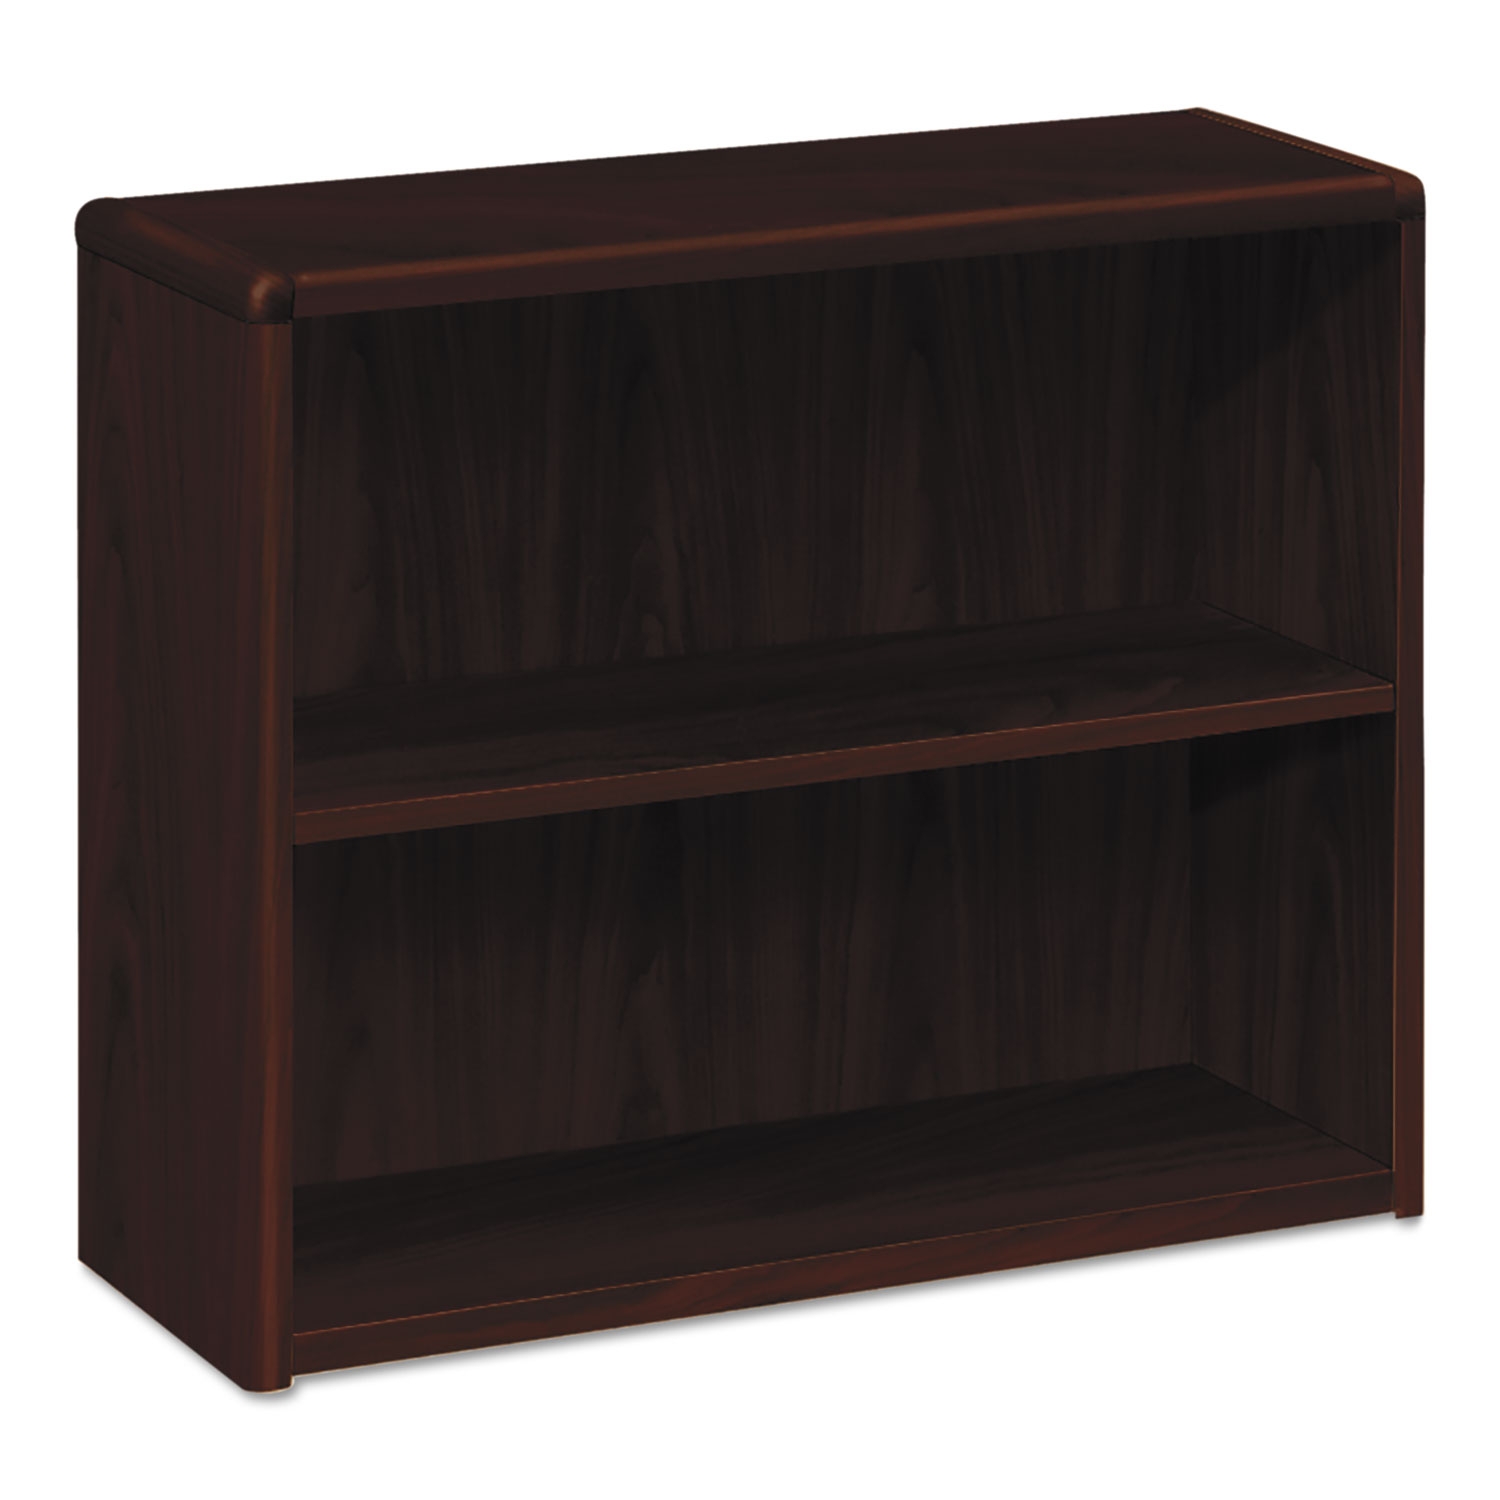  HON H10752.NN 10700 Series Wood Bookcase, Two Shelf, 36w x 13 1/8d x 29 5/8h, Mahogany (HON10752NN) 